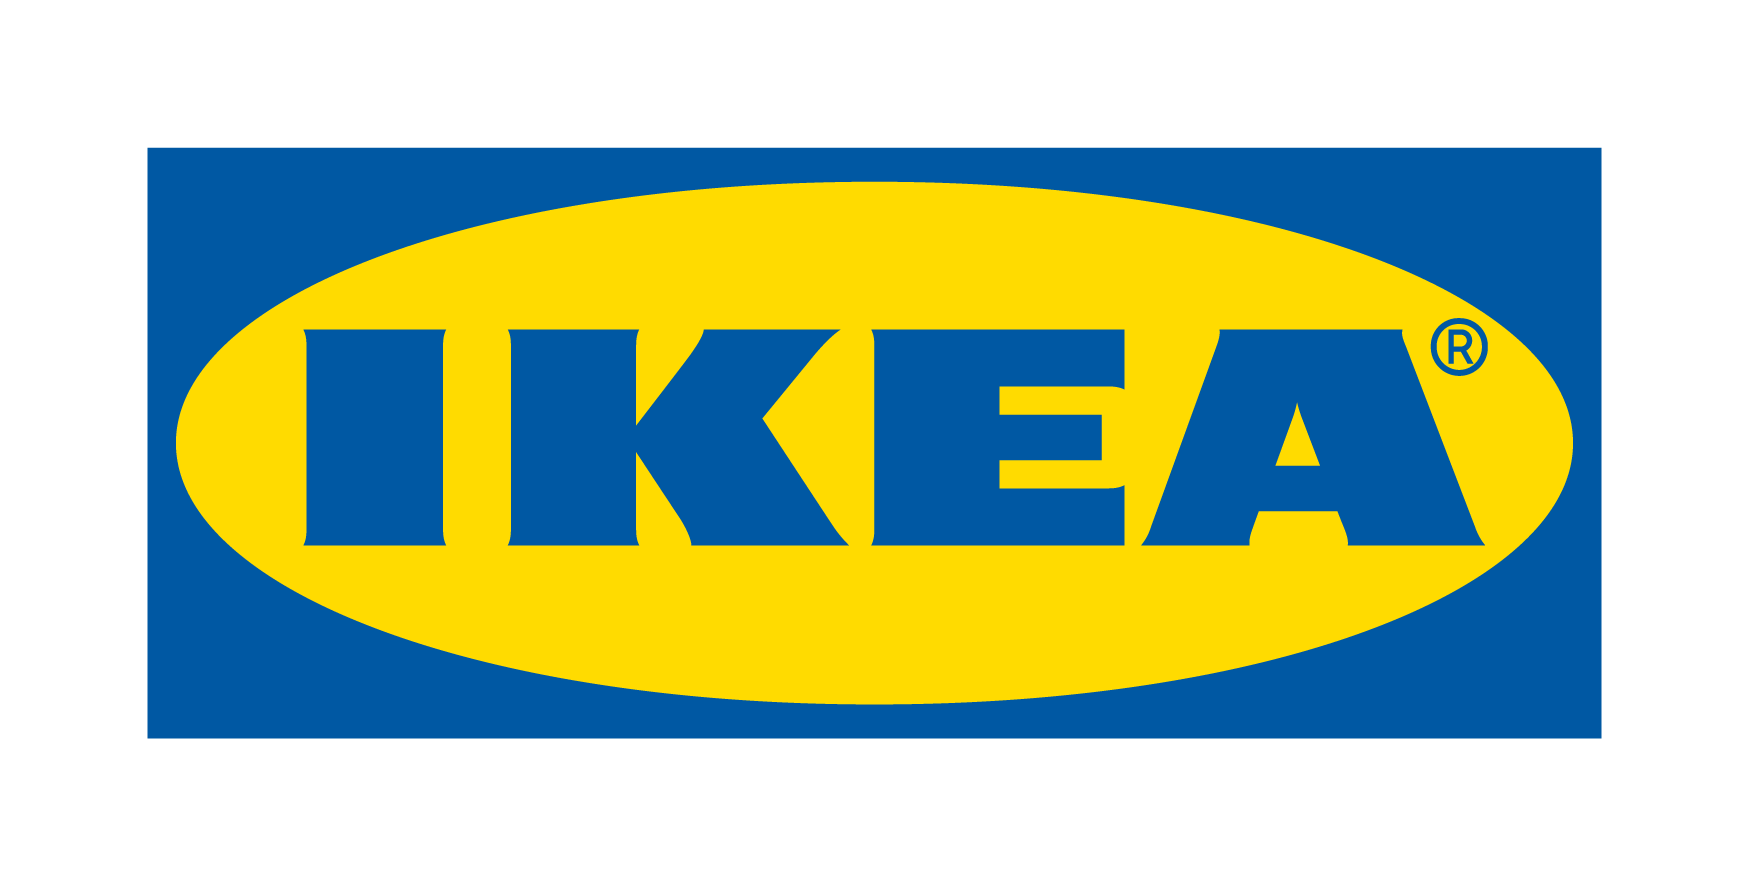  IKEA Oy